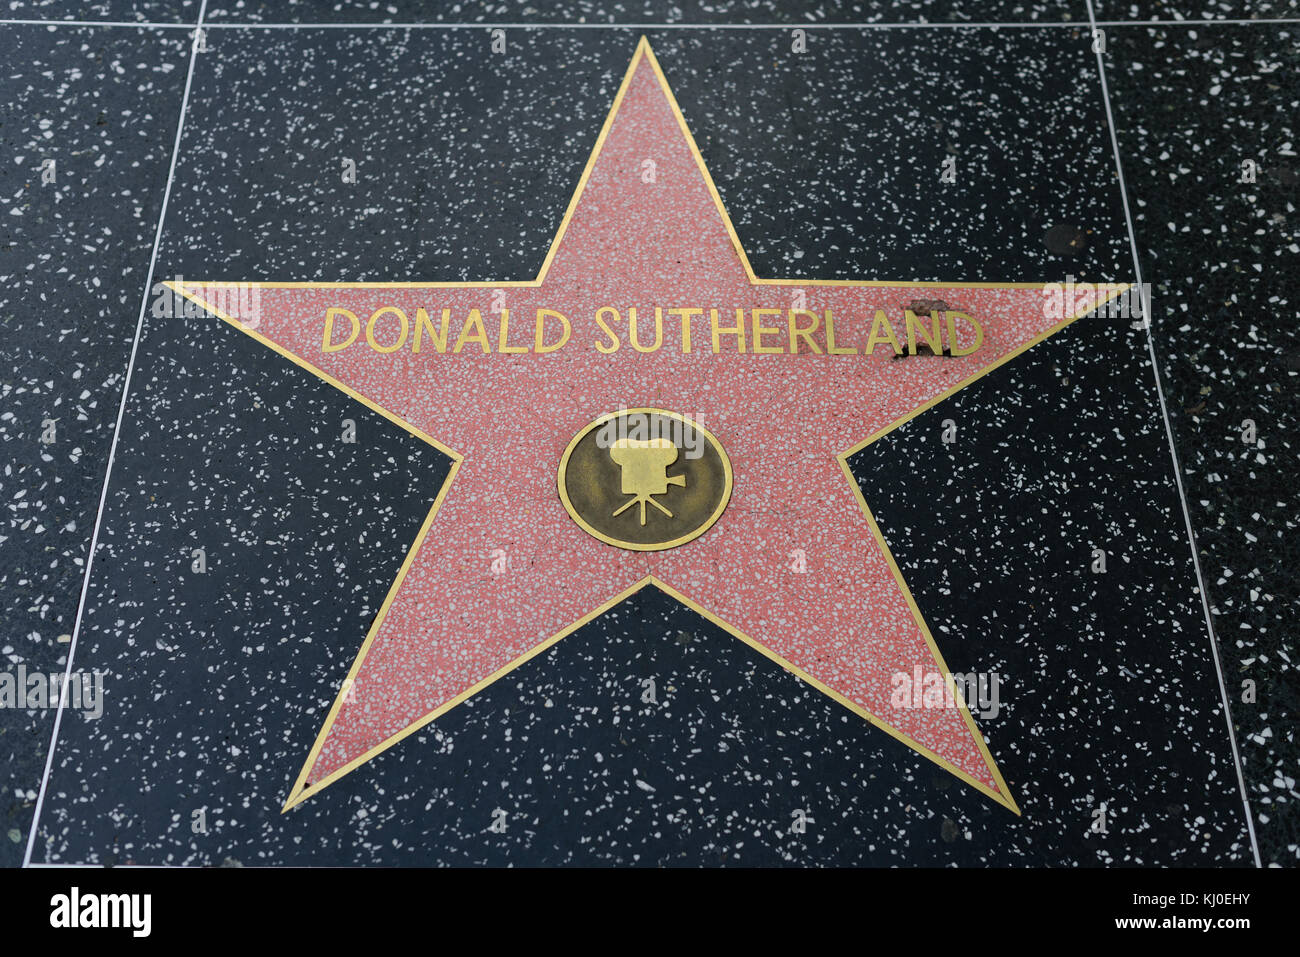 HOLLYWOOD, CA - DEZEMBER 06: Donald Sutherland Star auf dem Hollywood Walk of Fame in Hollywood, Kalifornien am 6. Dezember 2016. Stockfoto